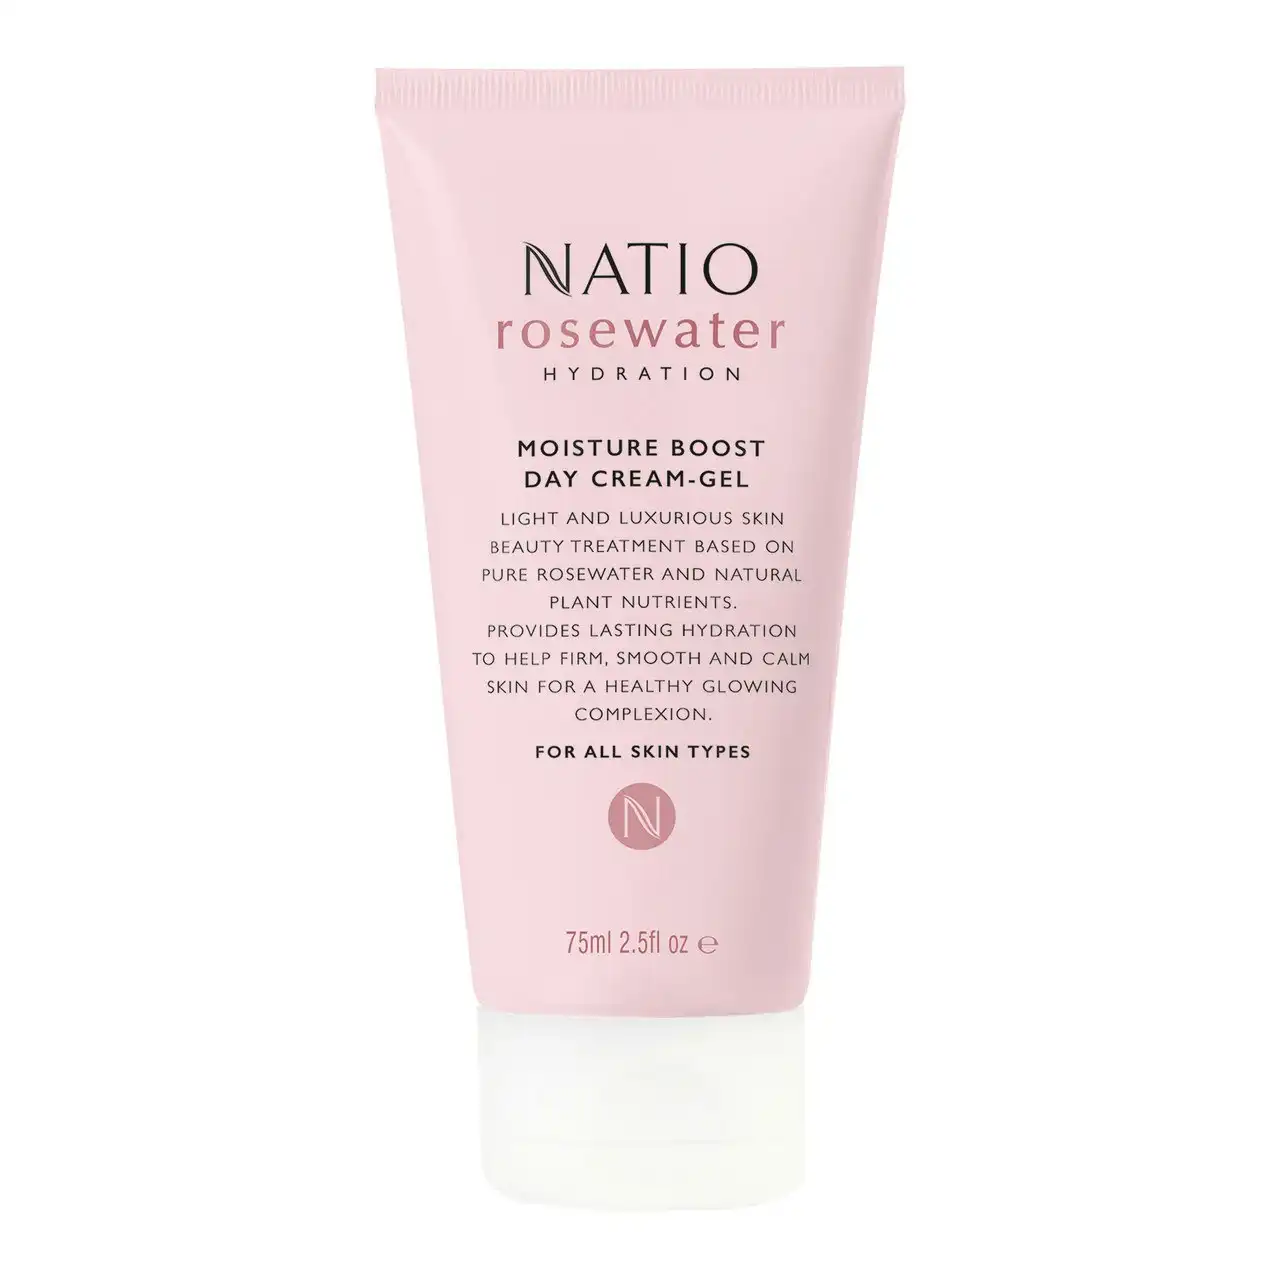 Natio Rosewater Hydration Moisture Boost Day Cream Gel 75ml